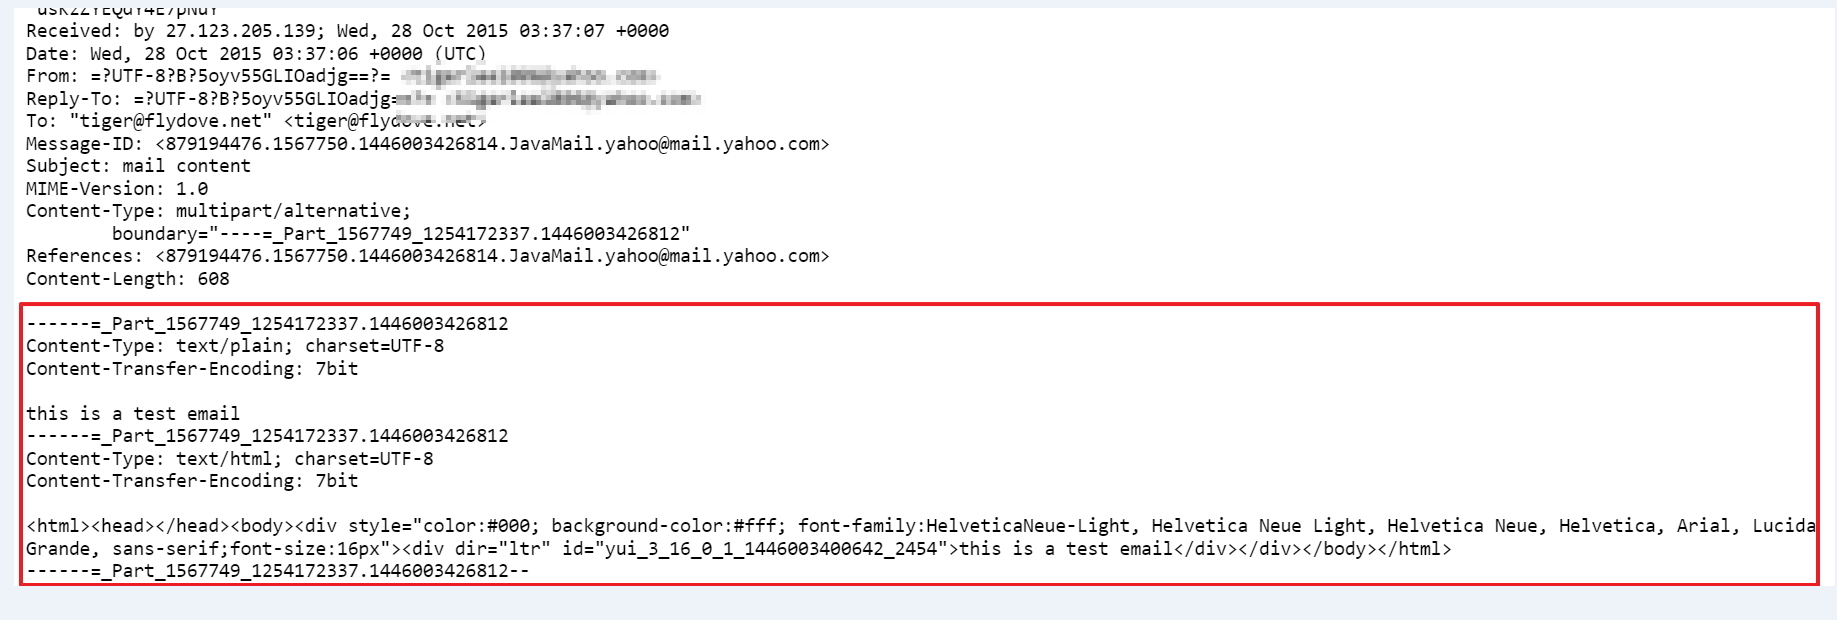 yahoo mail testing source code